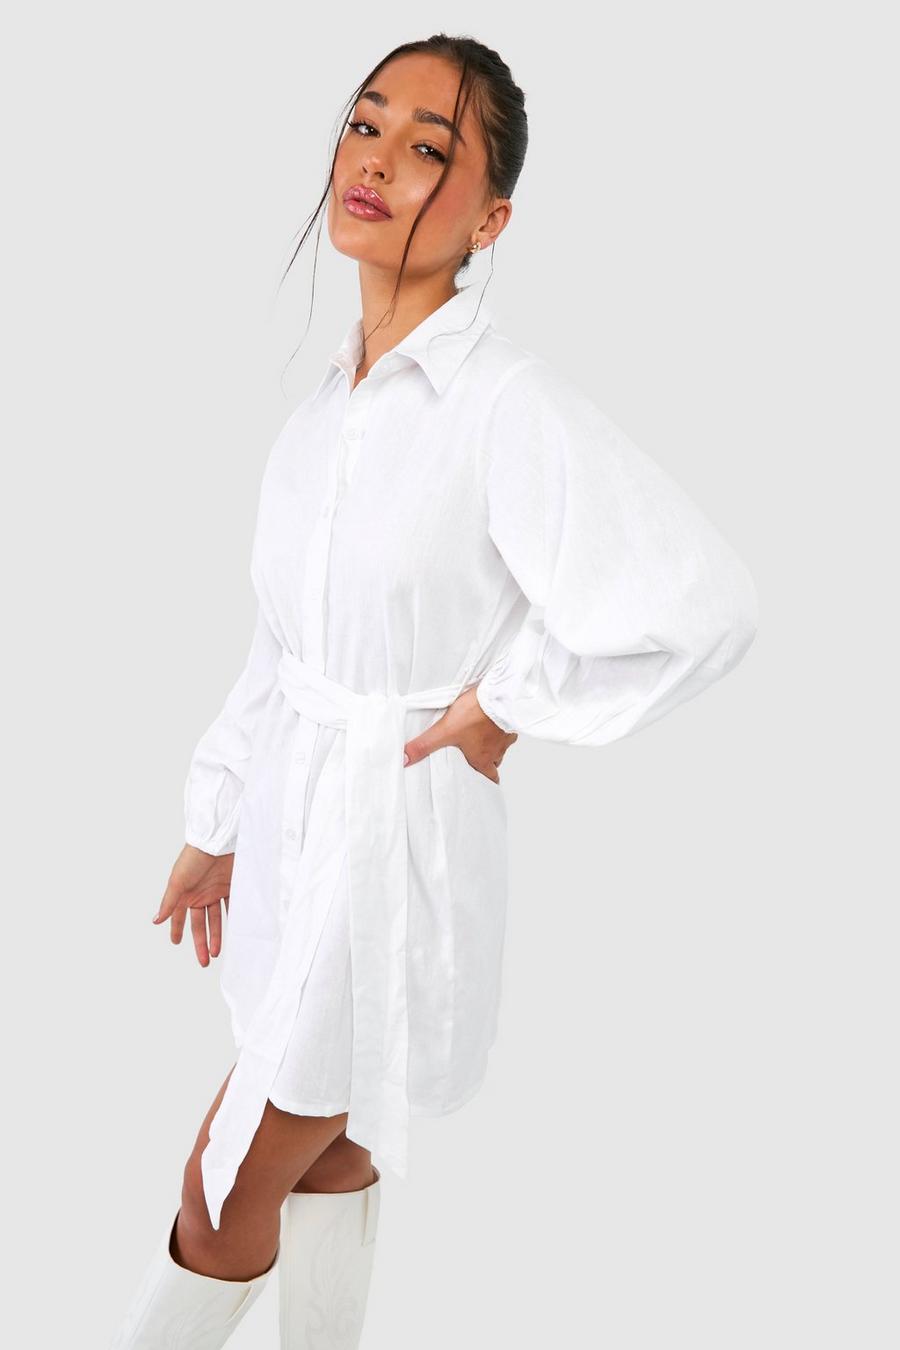 Ivory Petite Skjortklänning i linnetyg med knytskärp